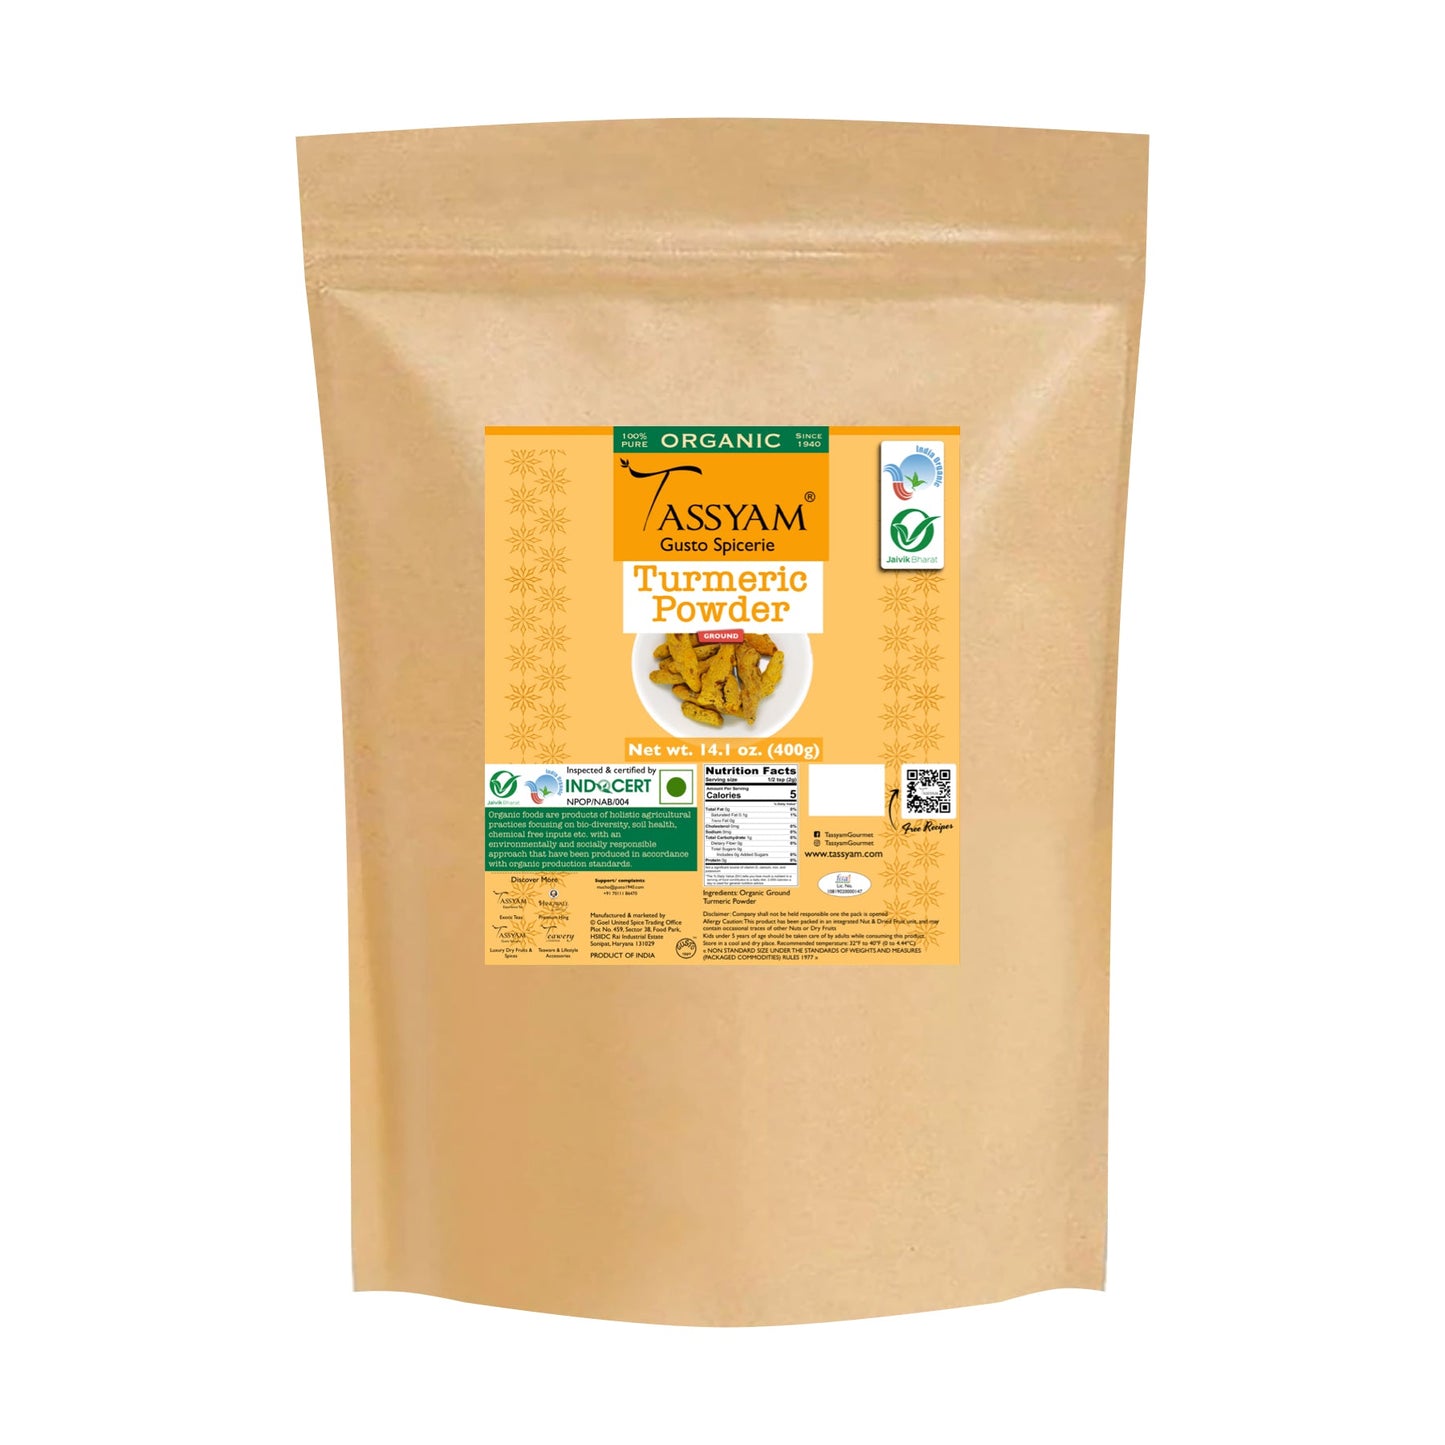 Certified 100% Organic Turmeric Powder - Tassyam Organics